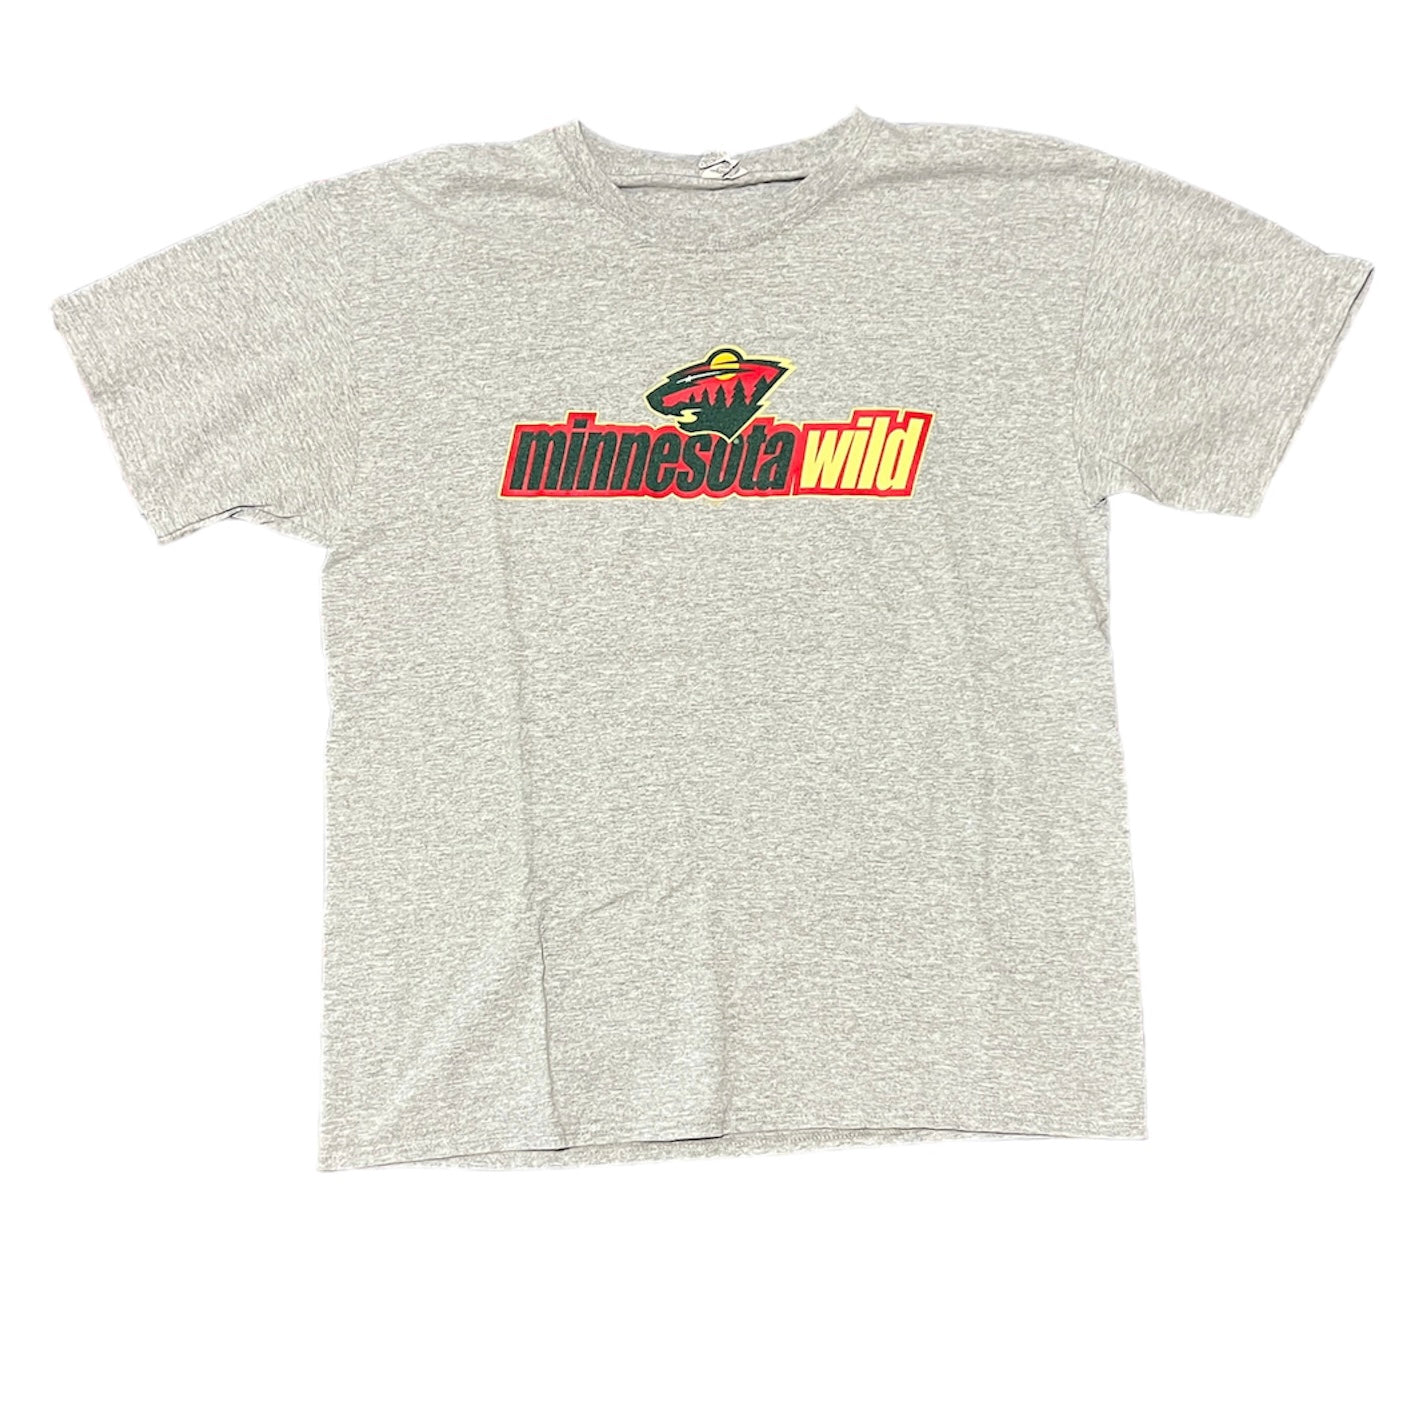 Minnesota Wild T-Shirt Size Large